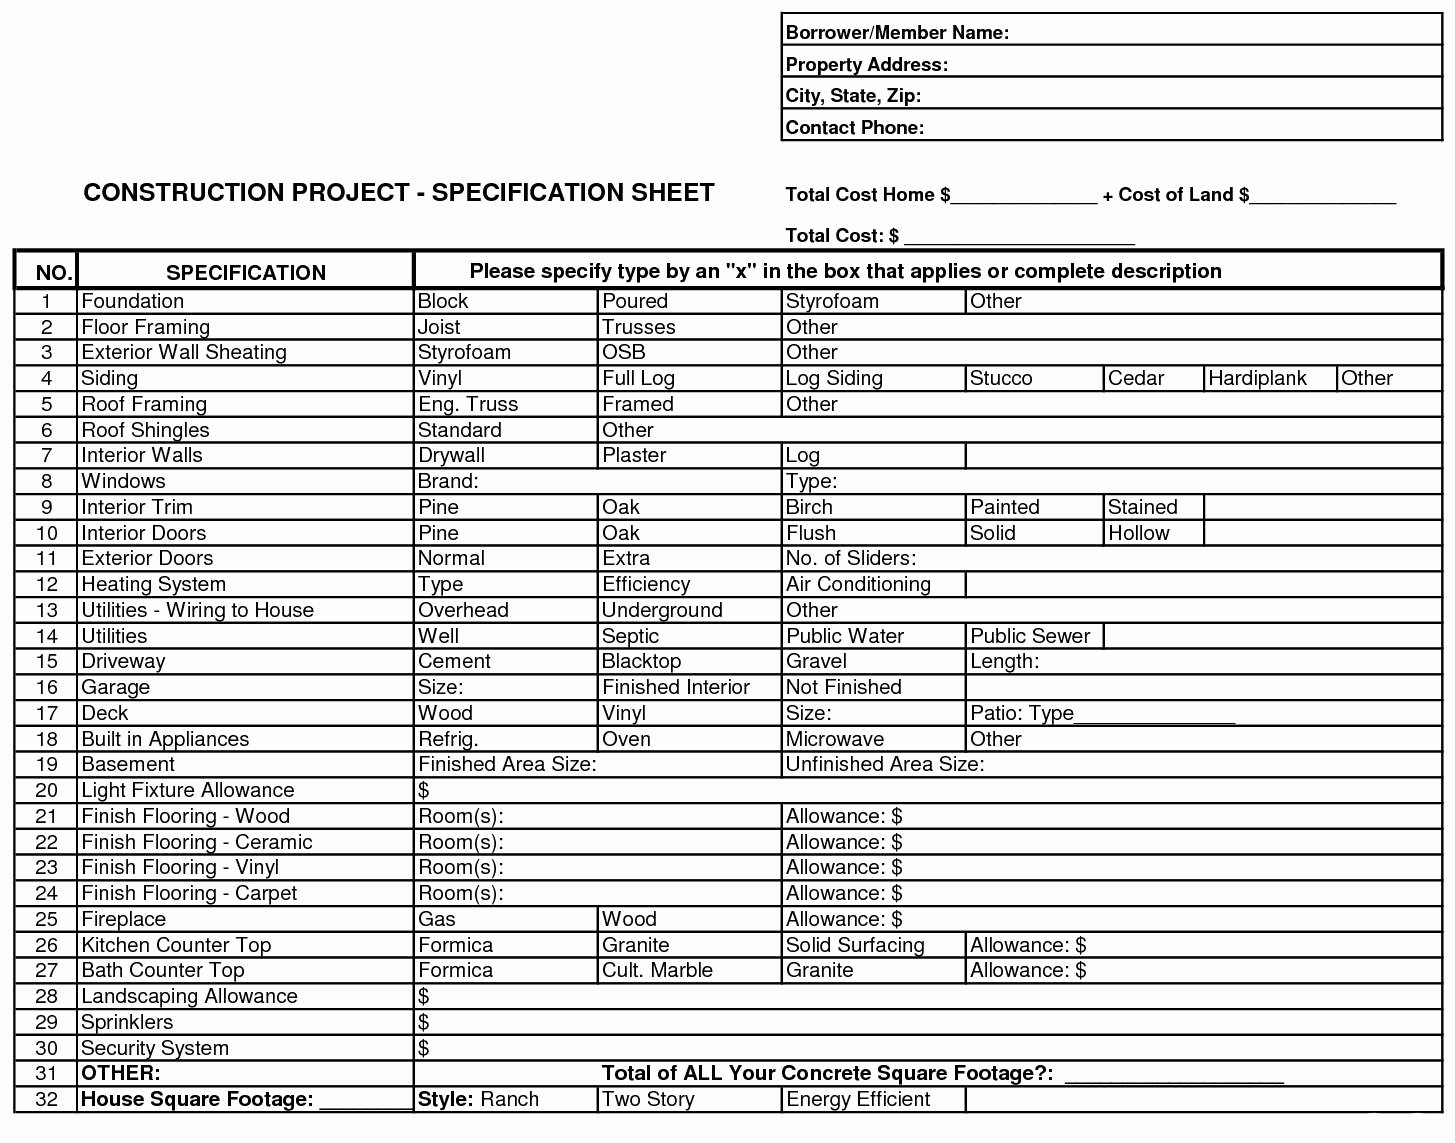 Builder Spec Sheet Template Unique New Home Construction Project Specification Sheet